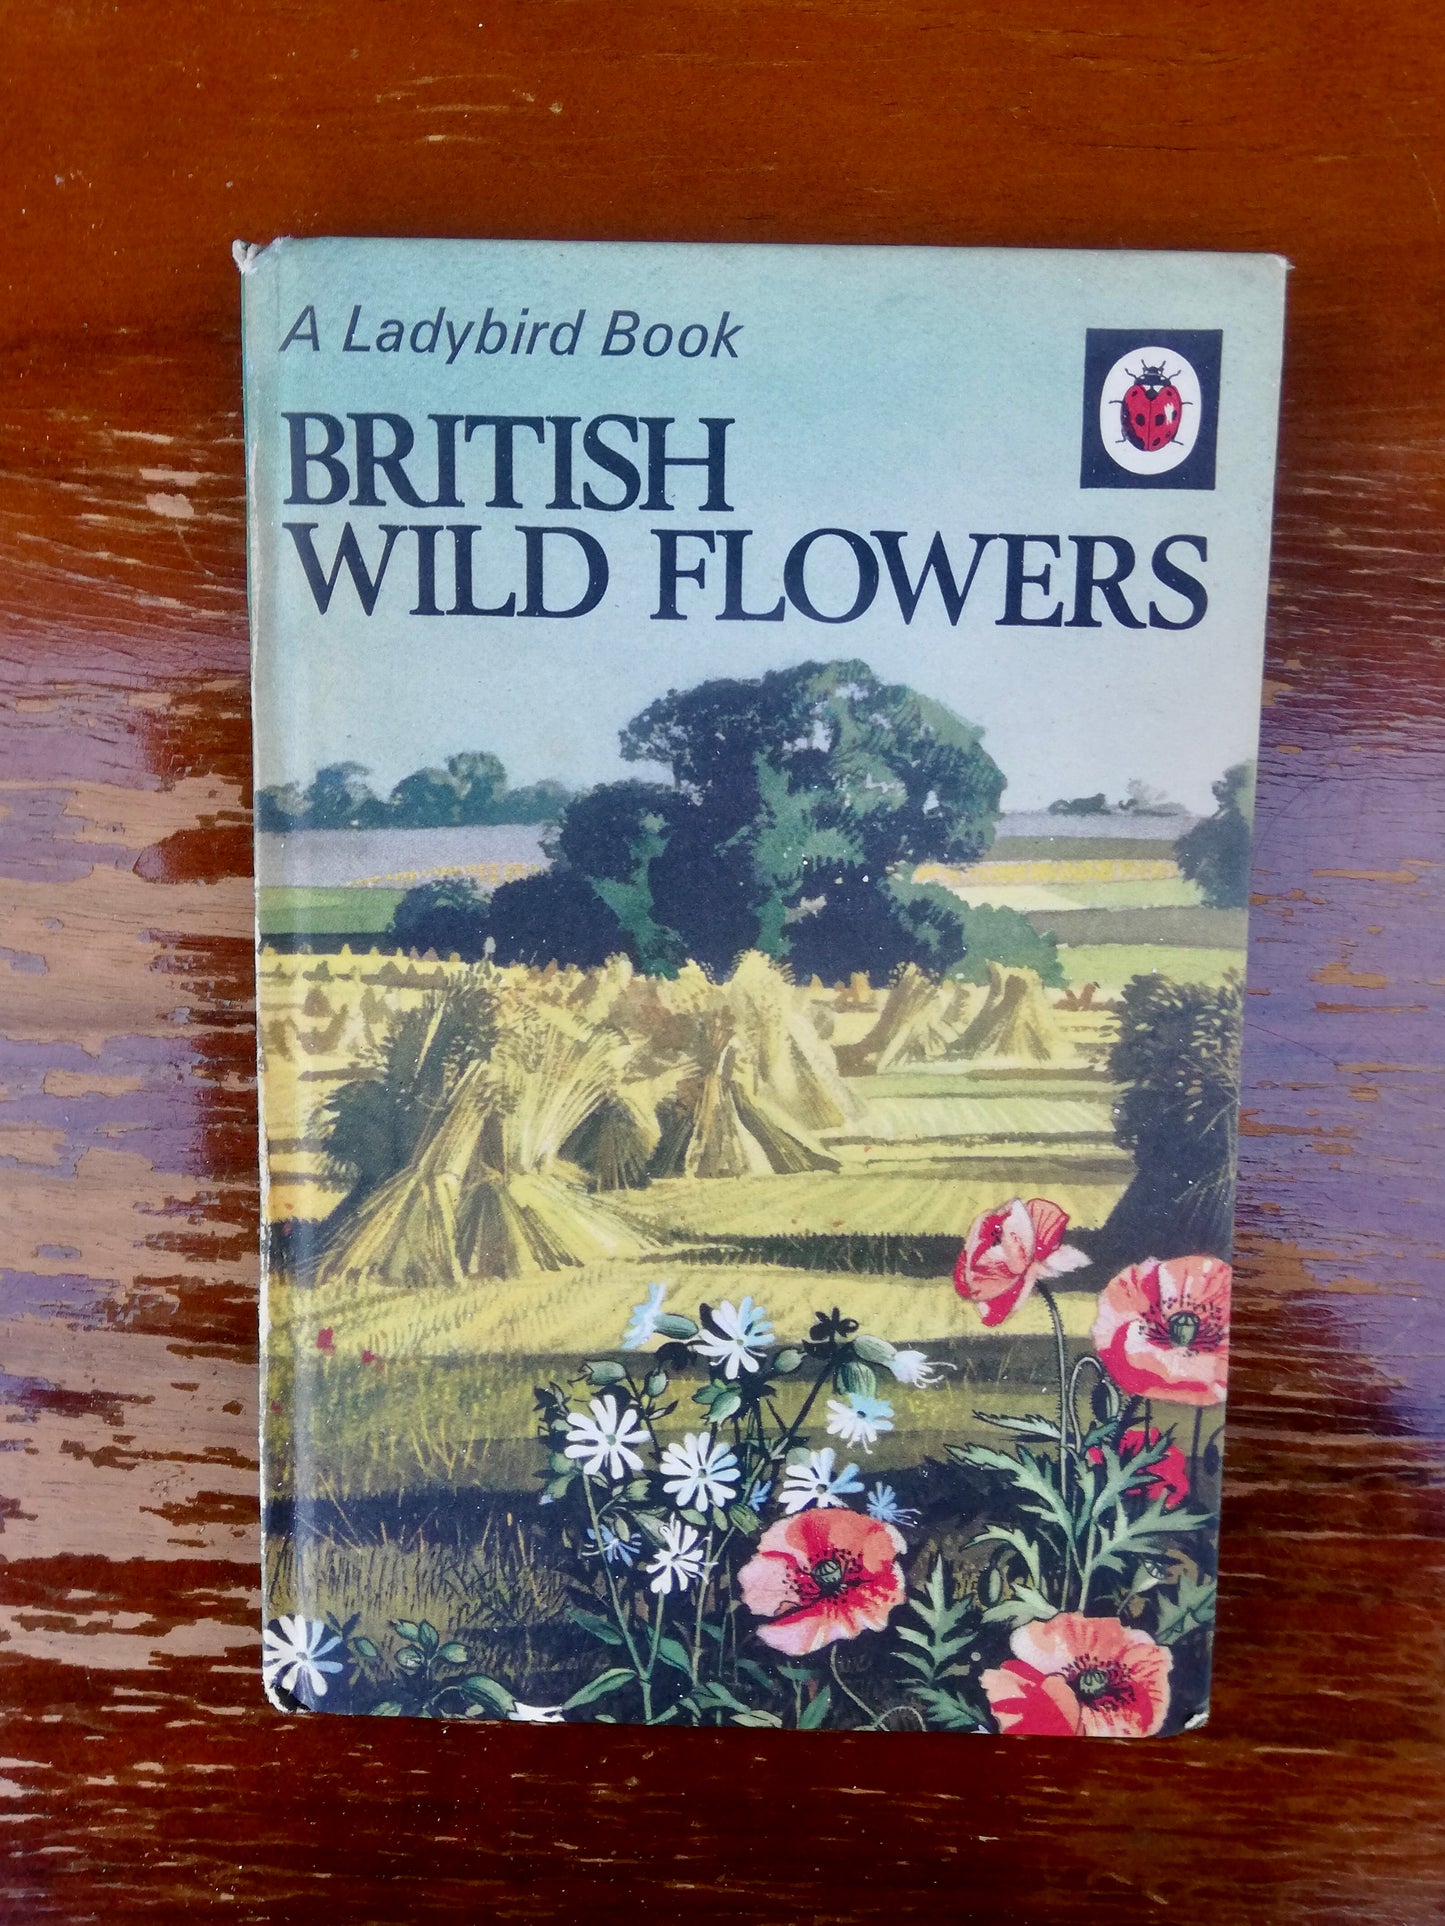 Vintage ladybird book - British Wildflowers